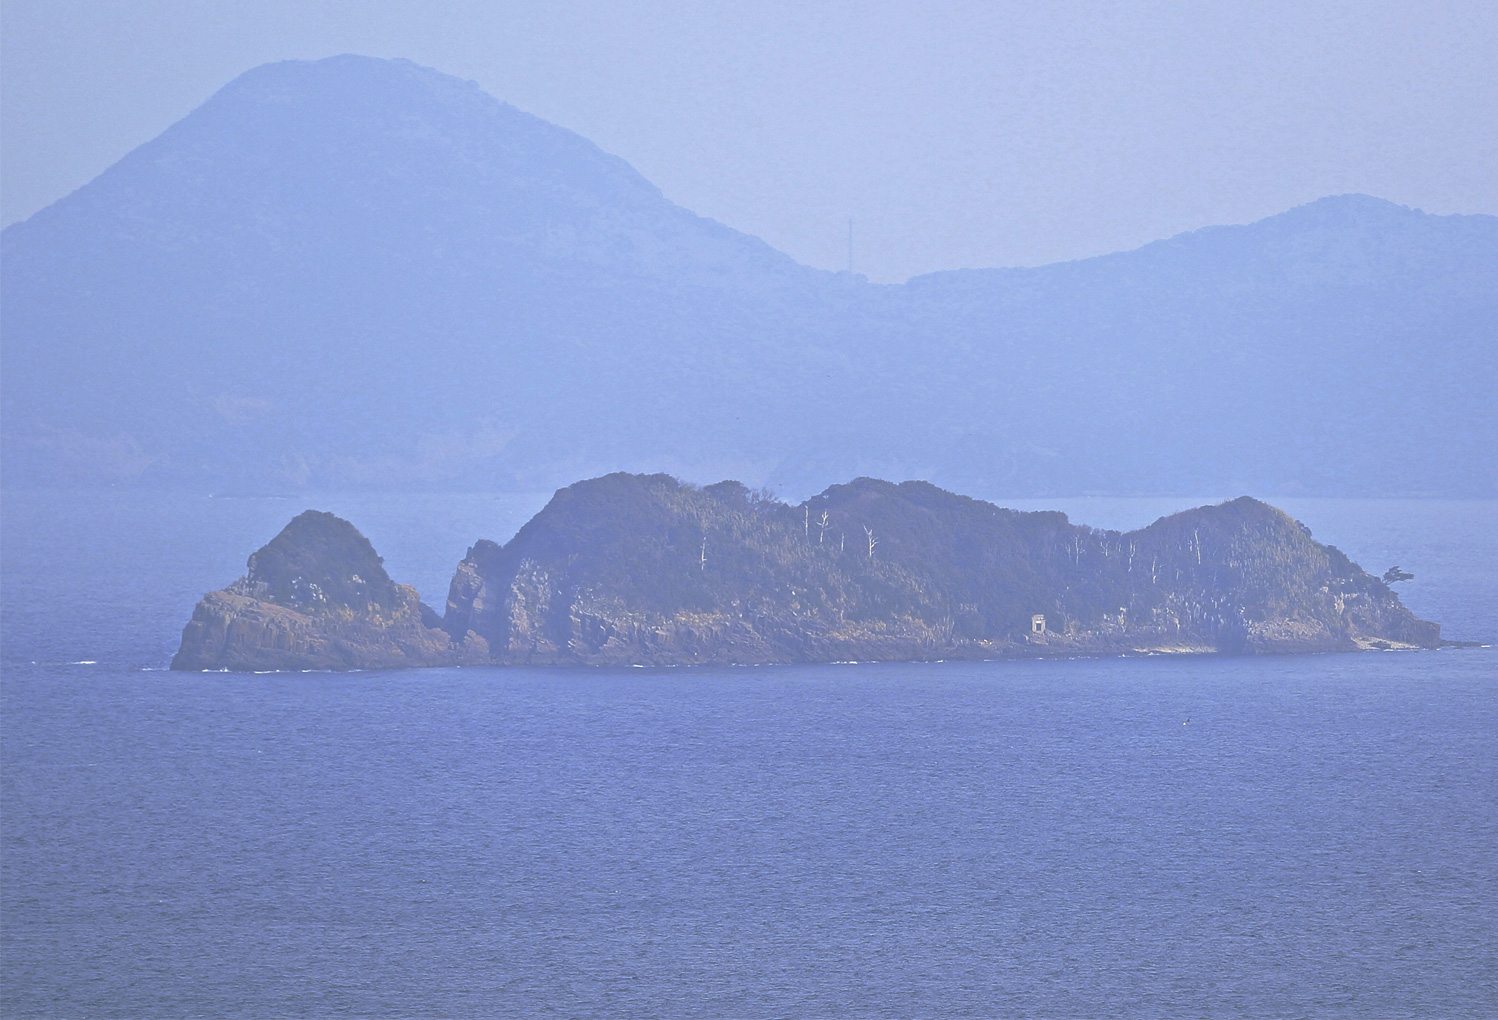 A view of Nakaeno Island from Ikitsuki Island